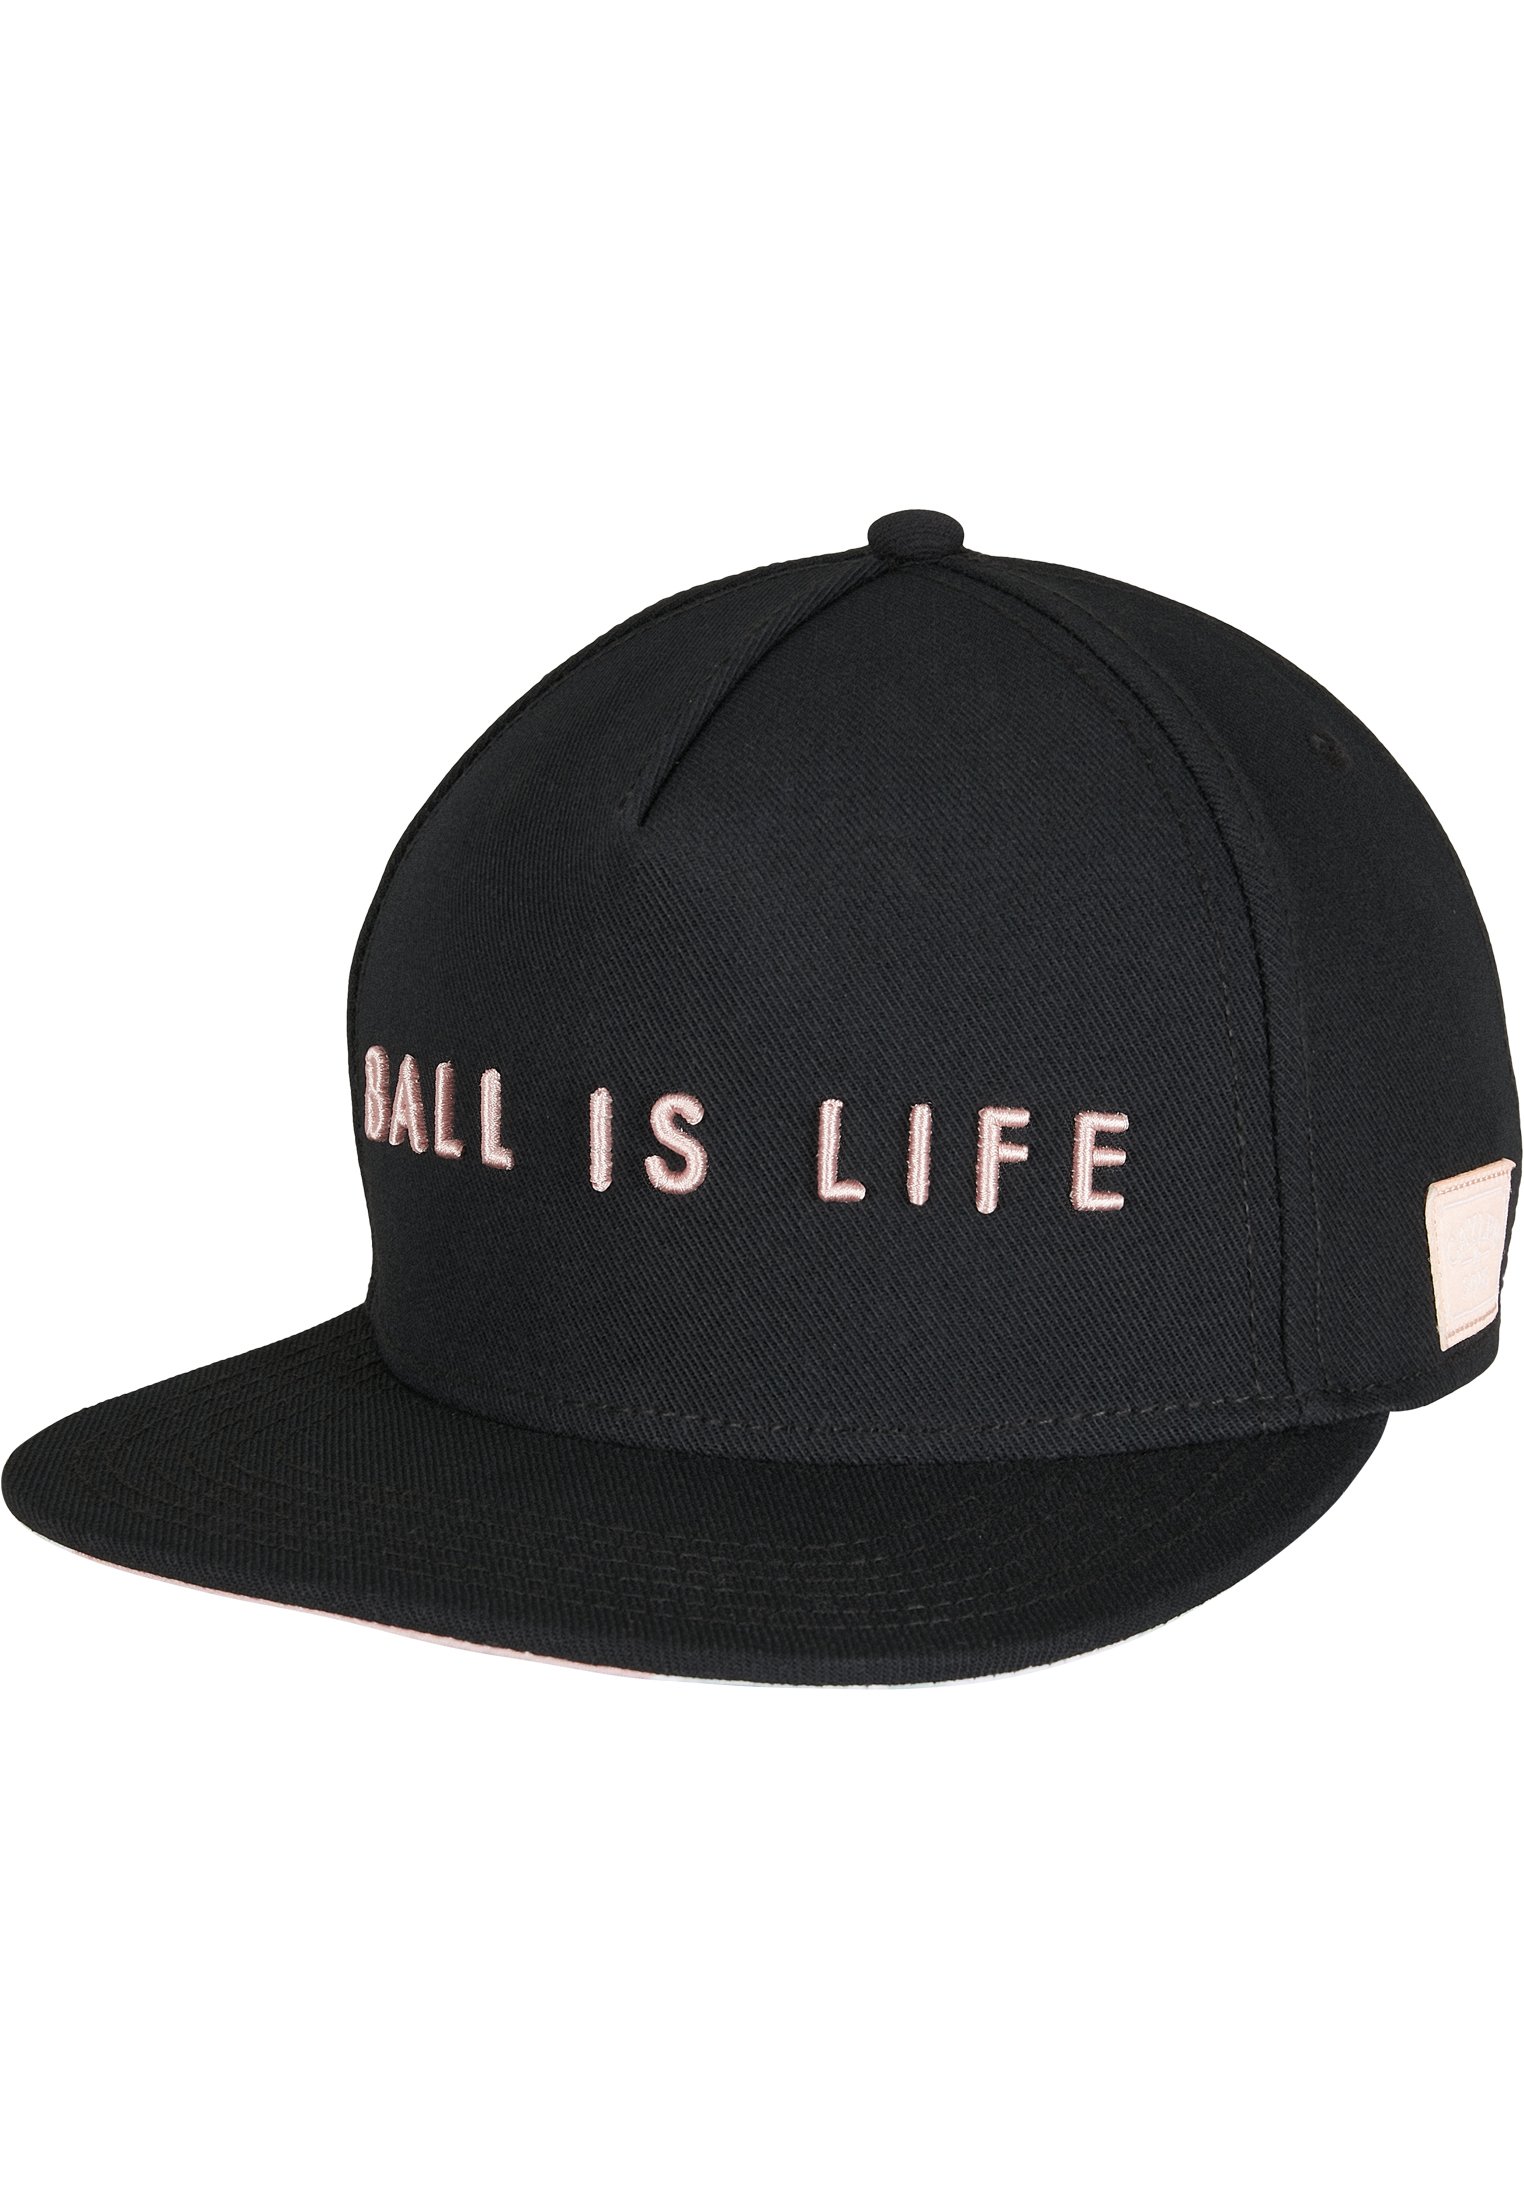 C&S WL Ball Is Life Snapback black/mc one size